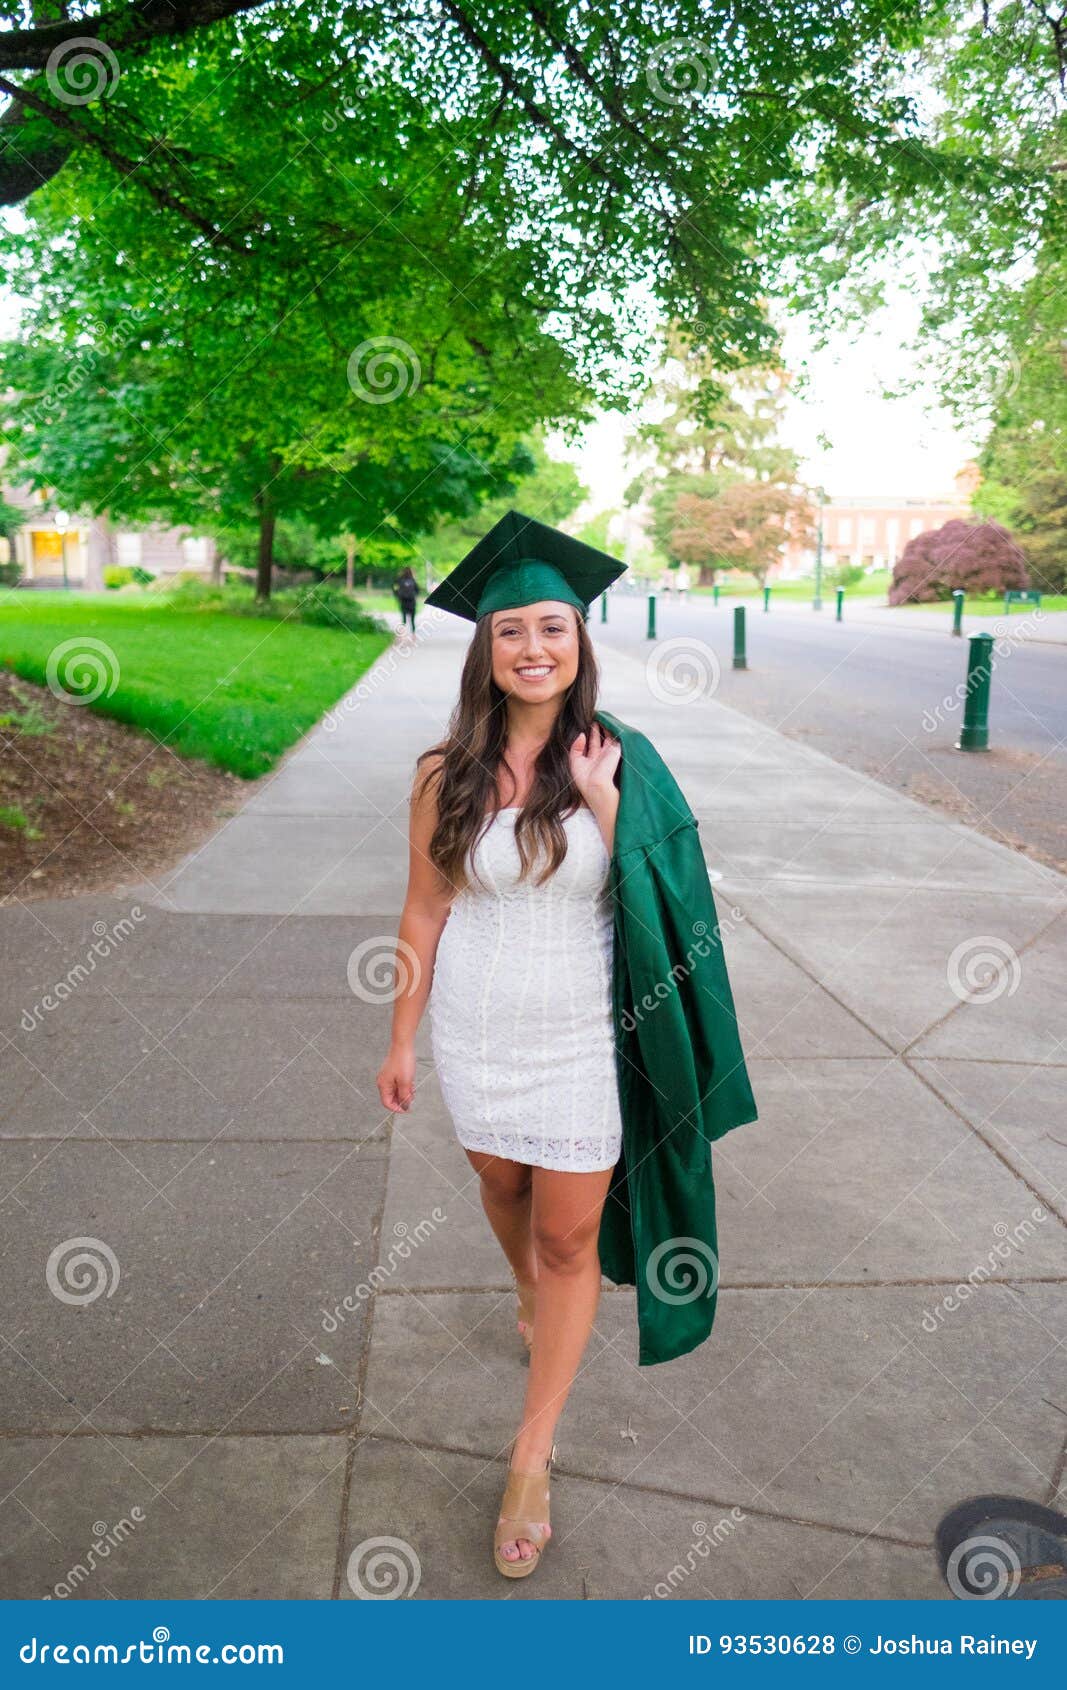 College Graduation Photos Posing Ideas (+ My Graduation Photos)